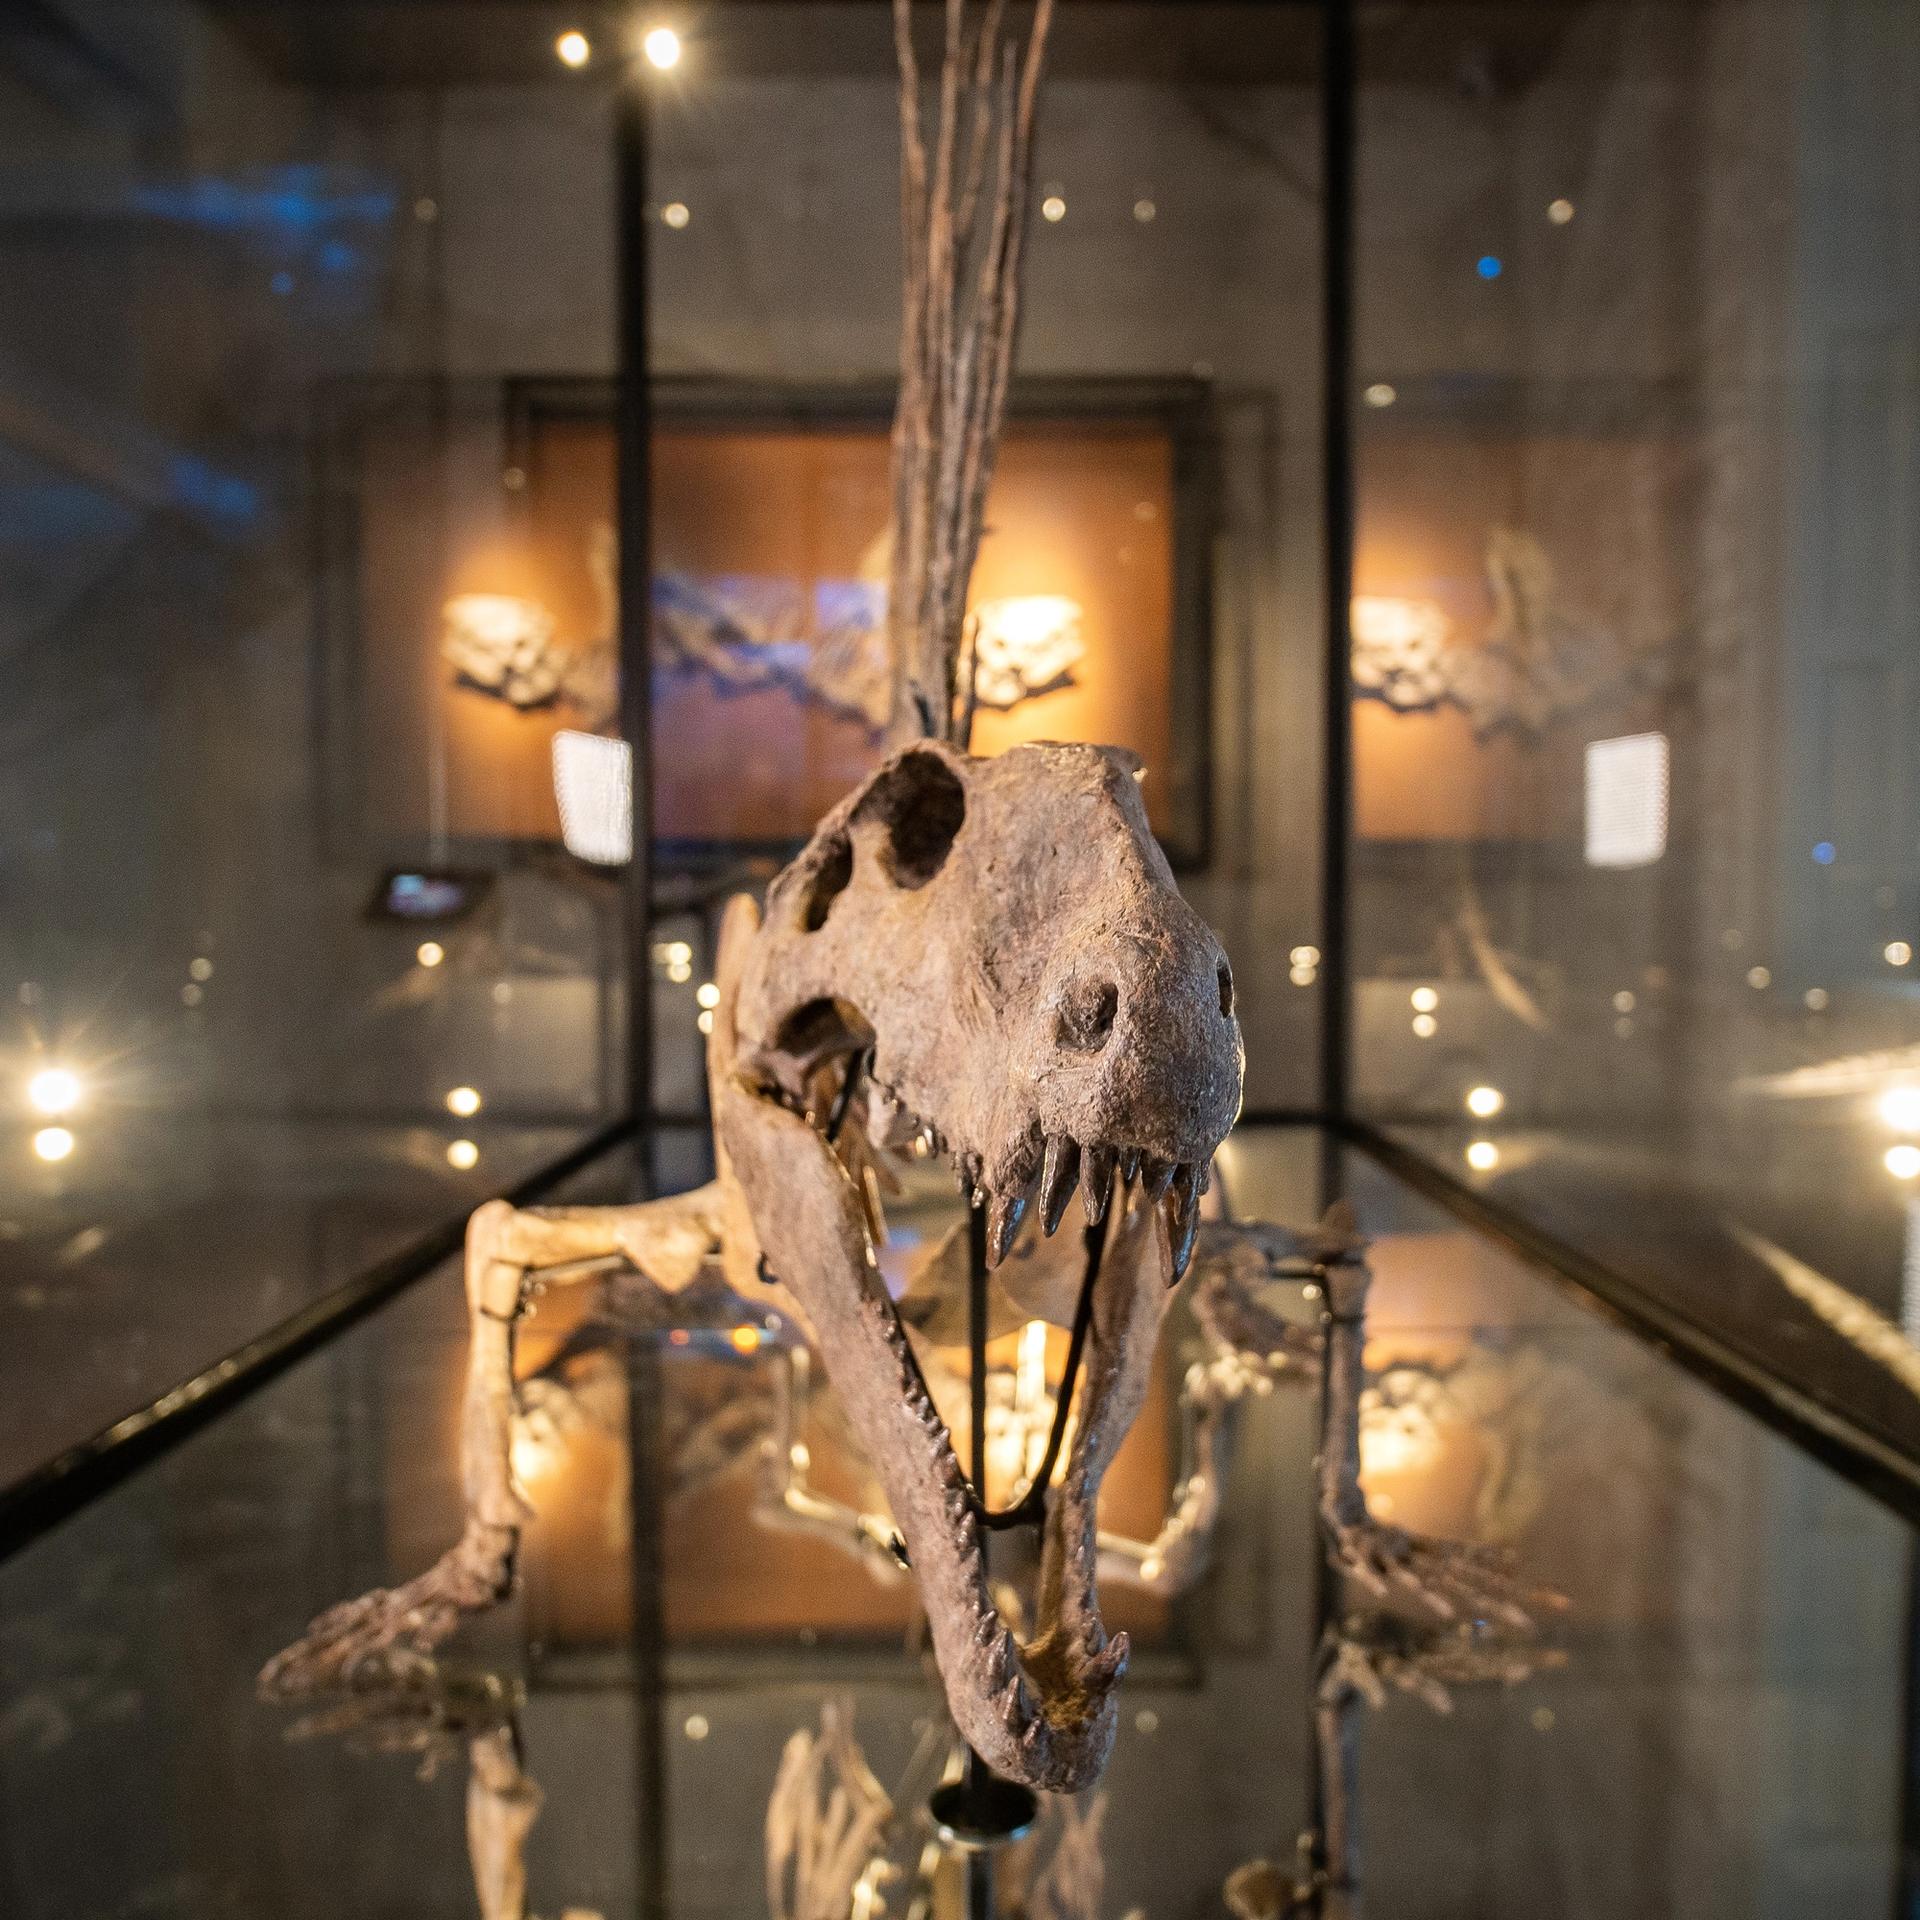 Dimetrodon grandis on display